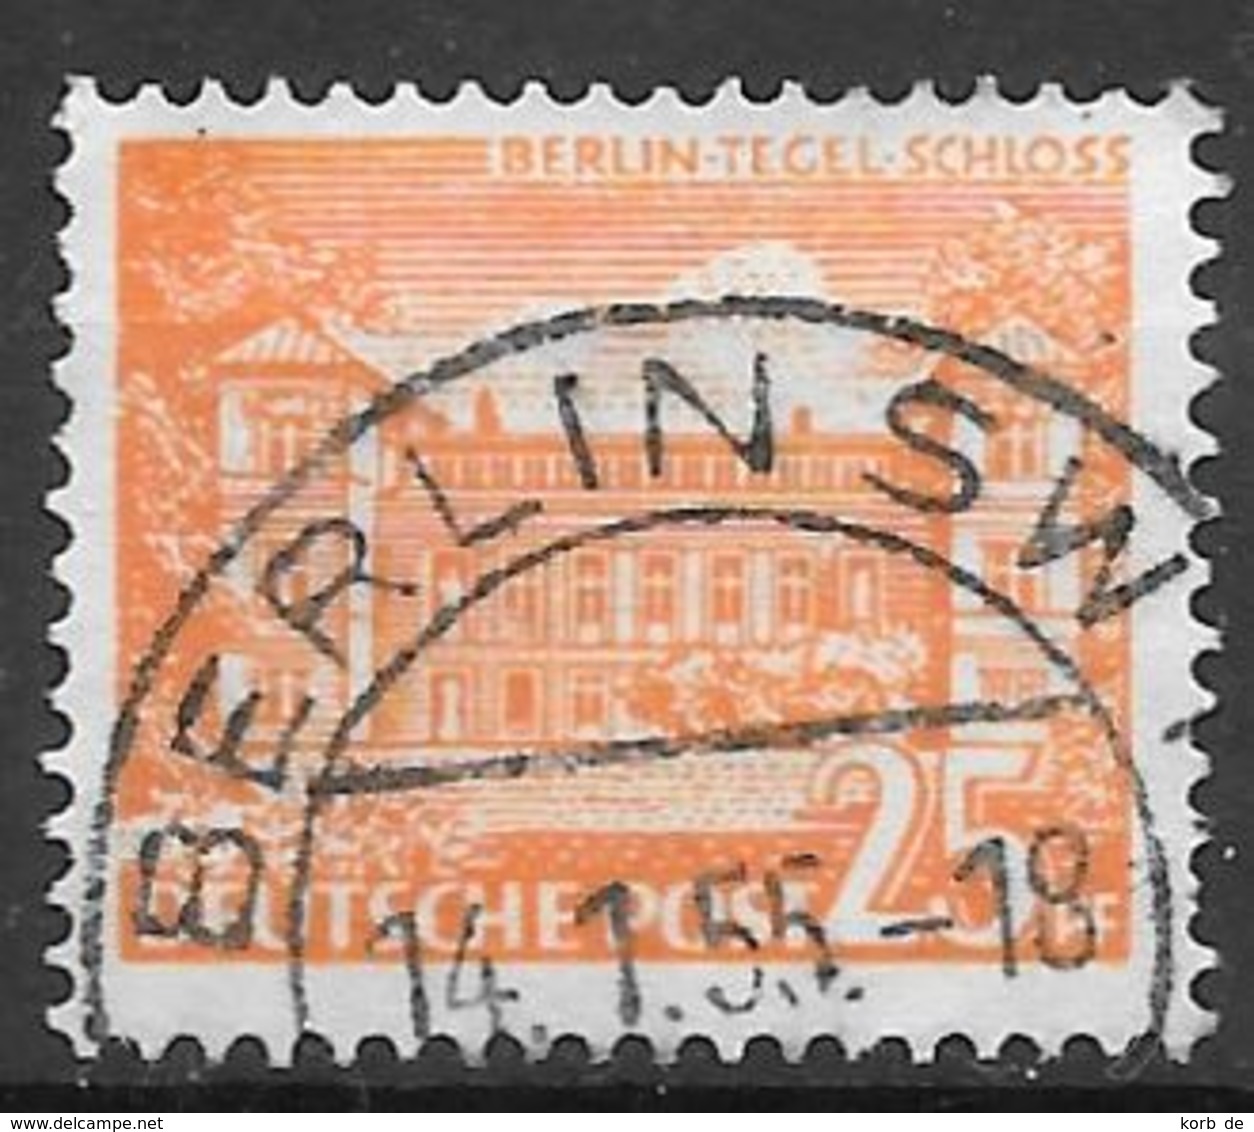 Berlin 1949 / MiNr.     50   Stempel   14.01.1955     O / Used  (f2058) - Usati